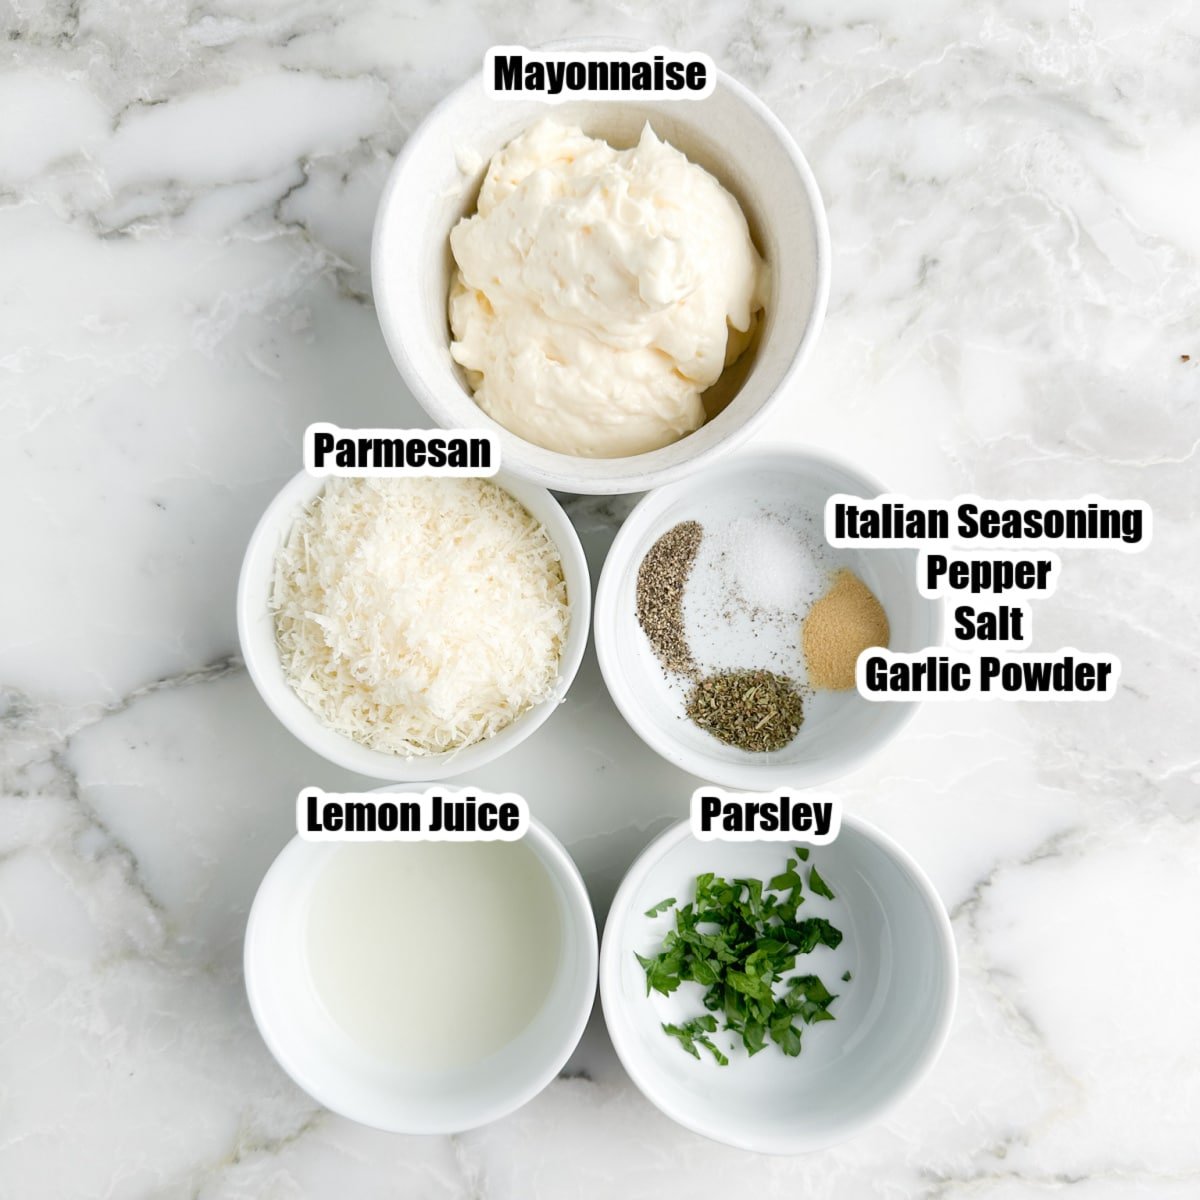 Bowl of mayonnaise, Parmesan cheese, seasonings, lemon juice, and parsley.